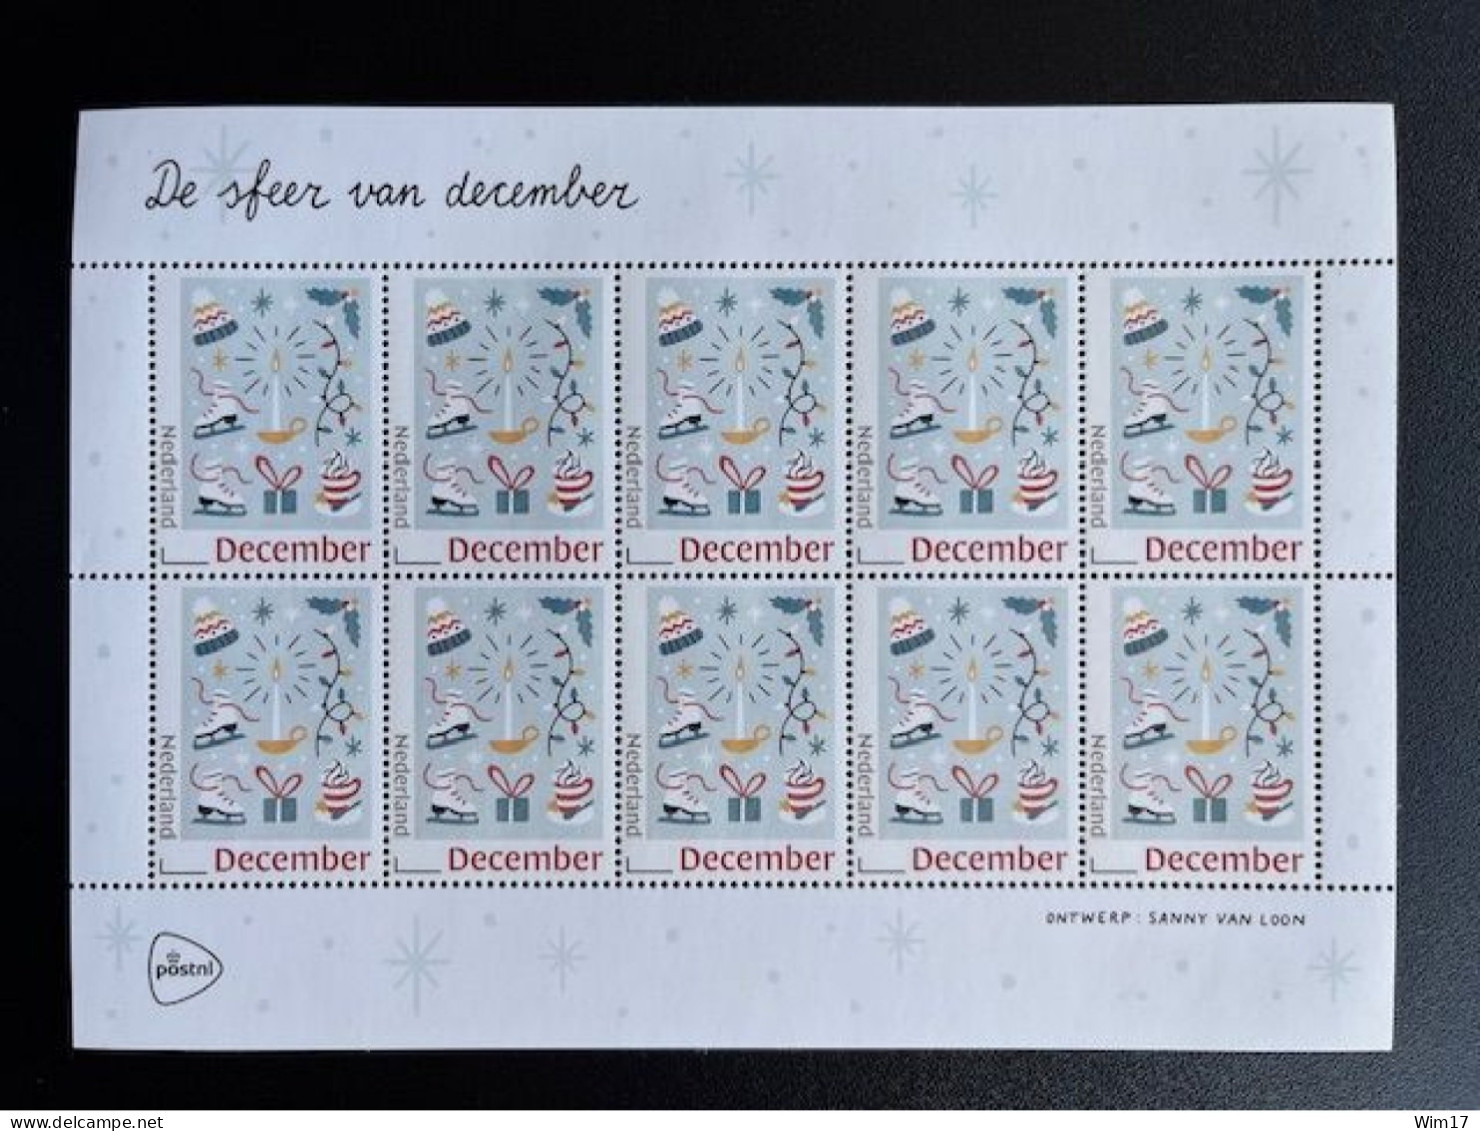 NETHERLANDS 2018 CHRISTMAS STAMPS SHEET OF 10 MNH 05-11-2018 NEDERLAND DECEMBERZEGELS NVPH 3697 - Covers & Documents